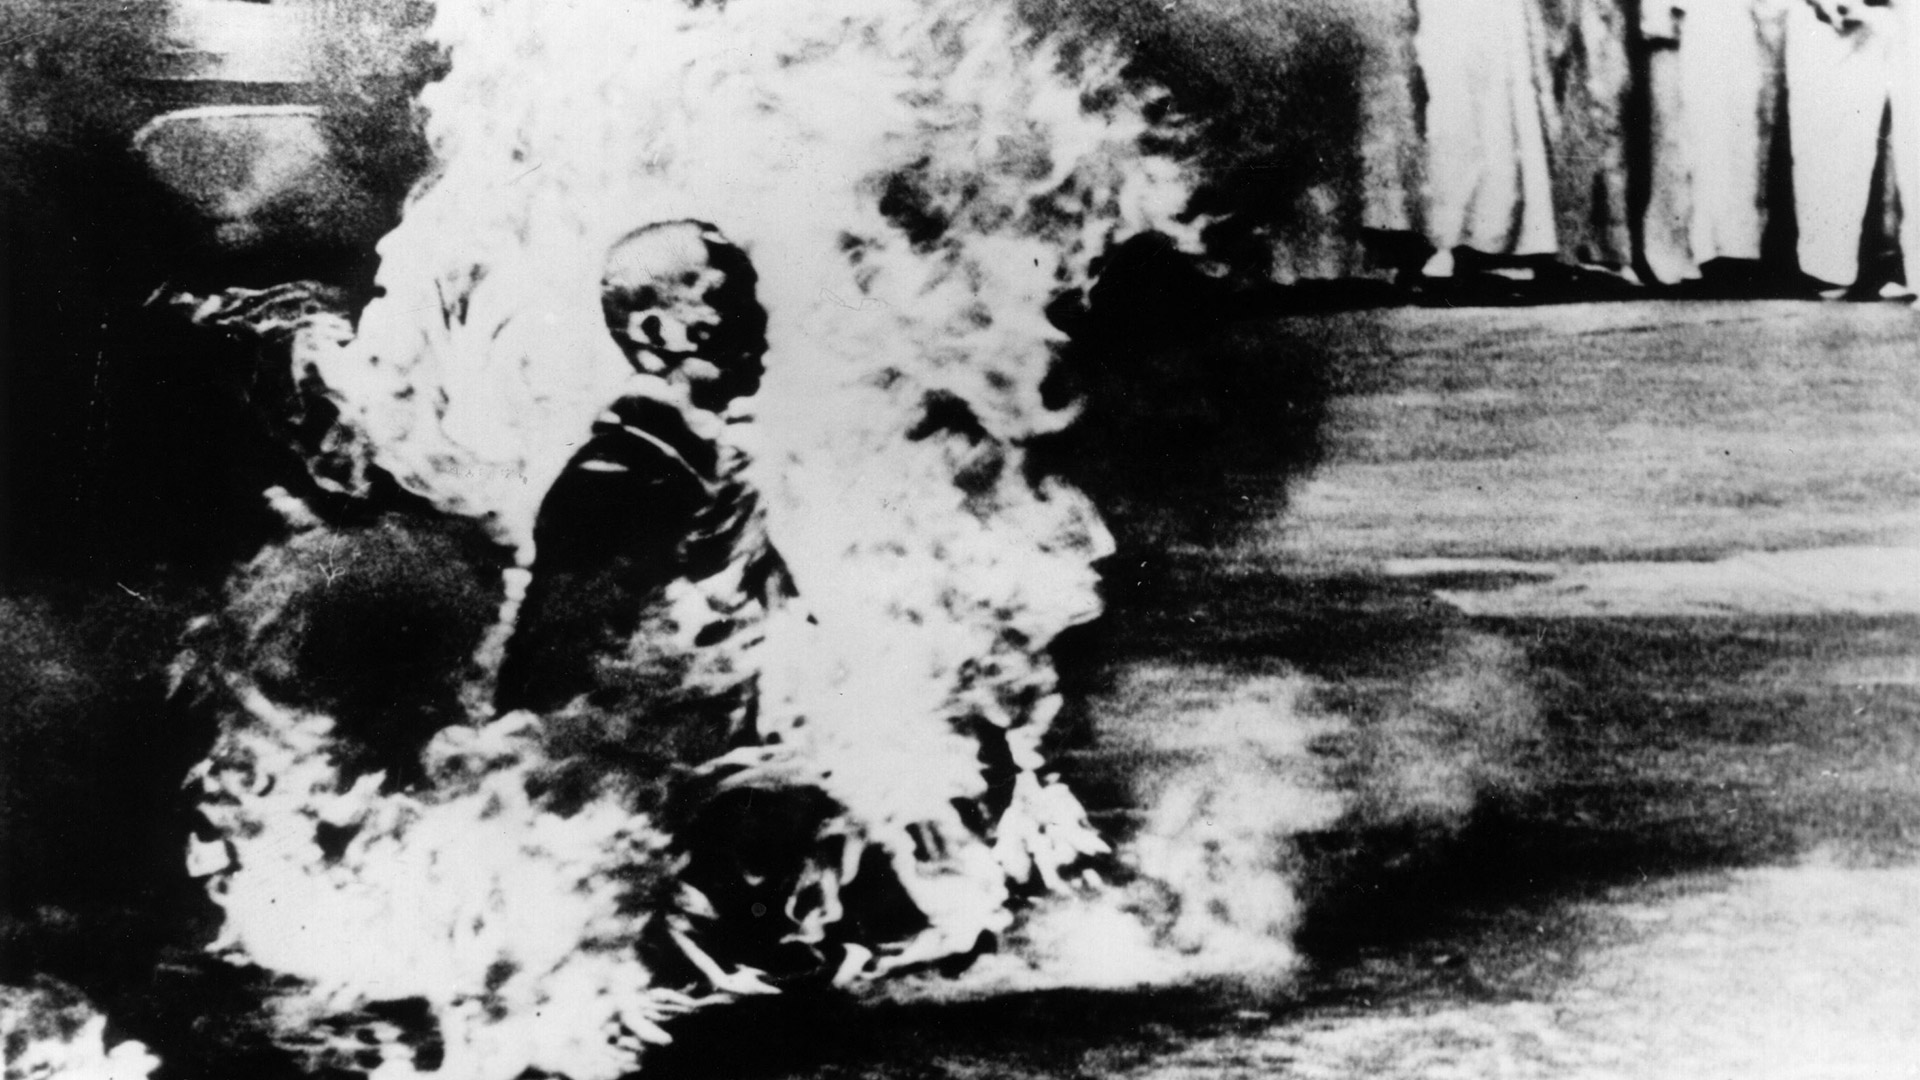 11 June 1963: El monje budista Thich Quang Duc realiza's ultimatum protest in Saigón prendiéndose fuego (Photo by Keystone / Getty Images)